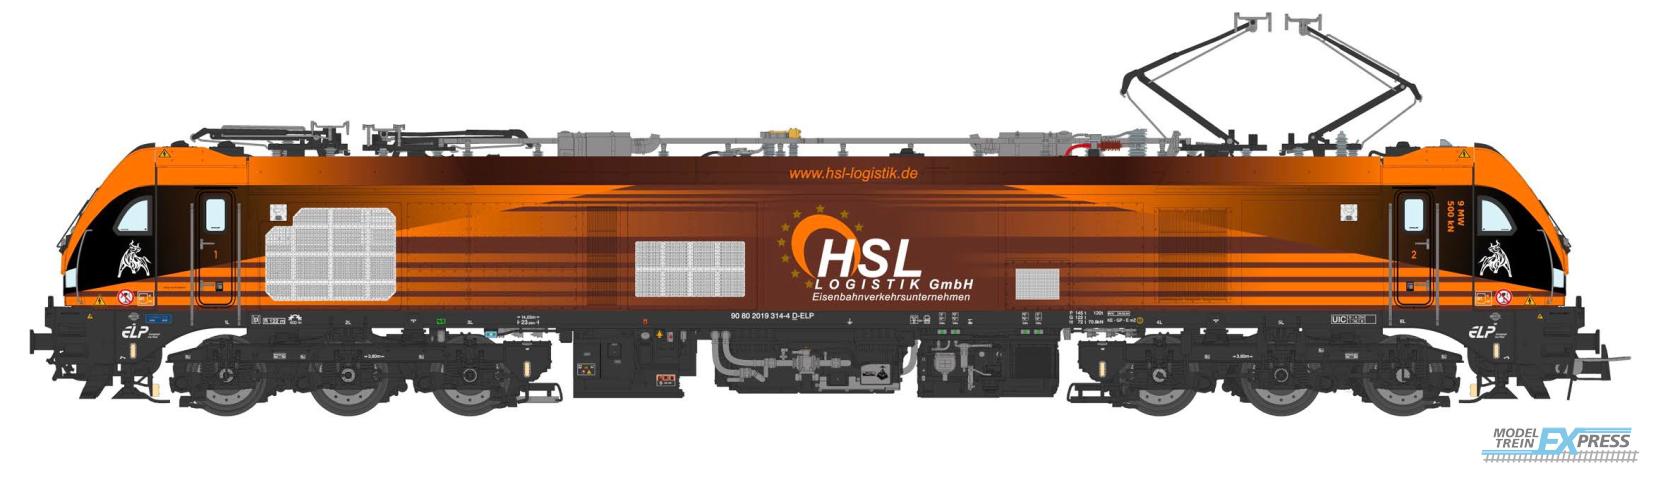 Sudexpress S0193149 Euro 9000 locomotive 2019 314-4 HSL Logistics GmbH, AC Digital